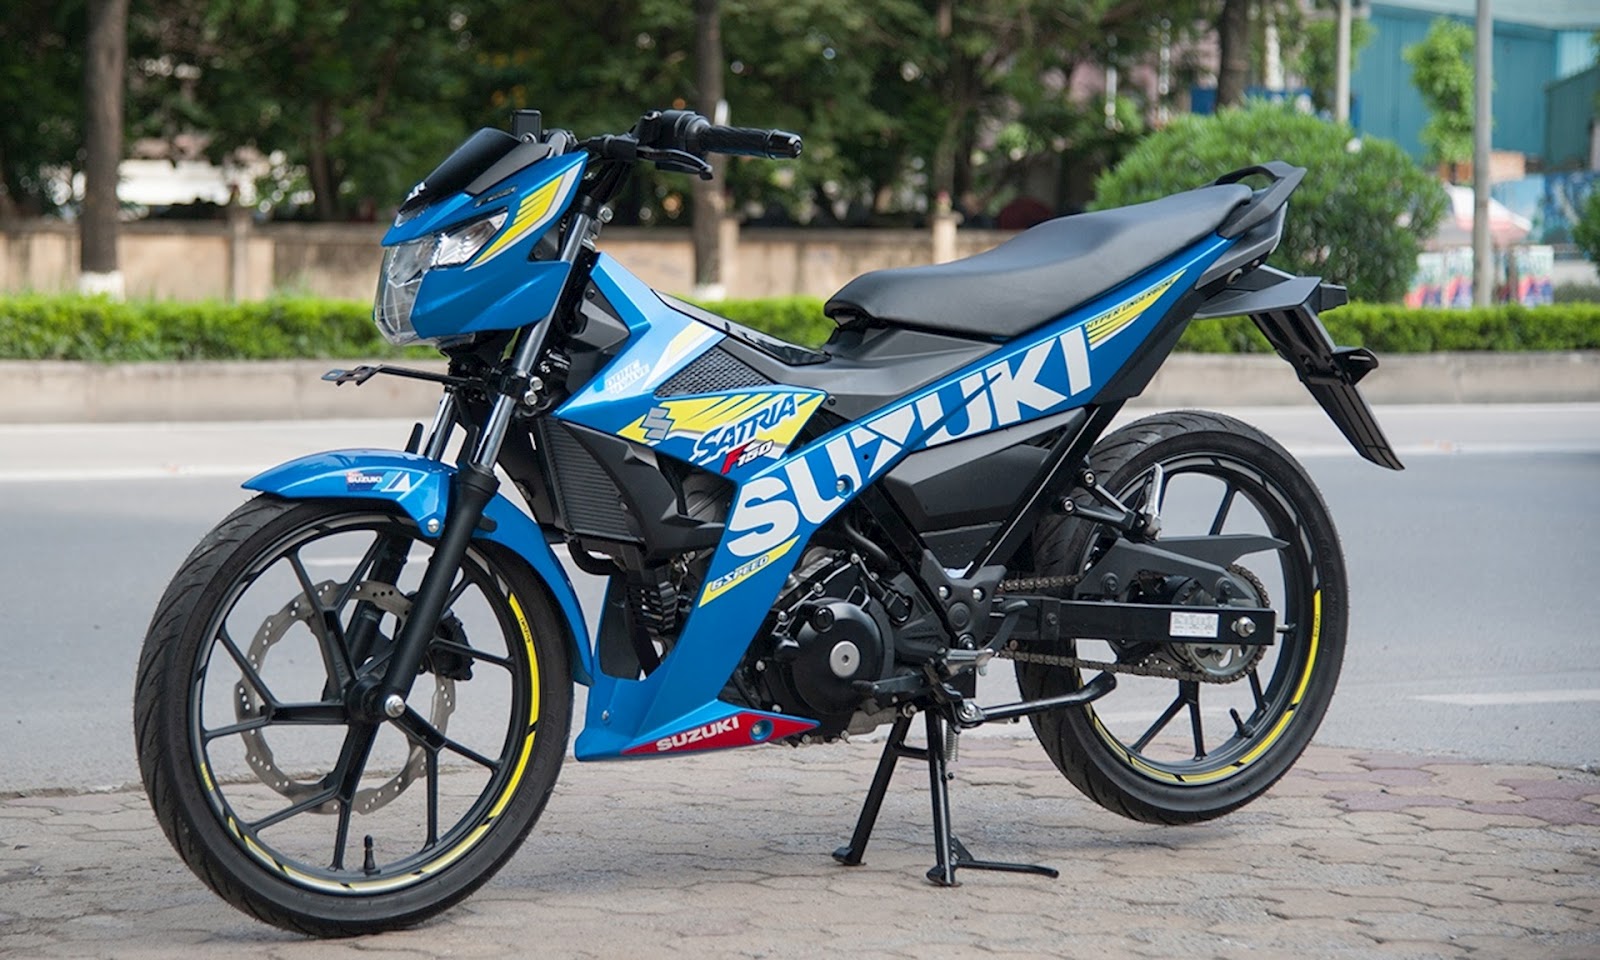  Xe máy Suzuki Satria F150